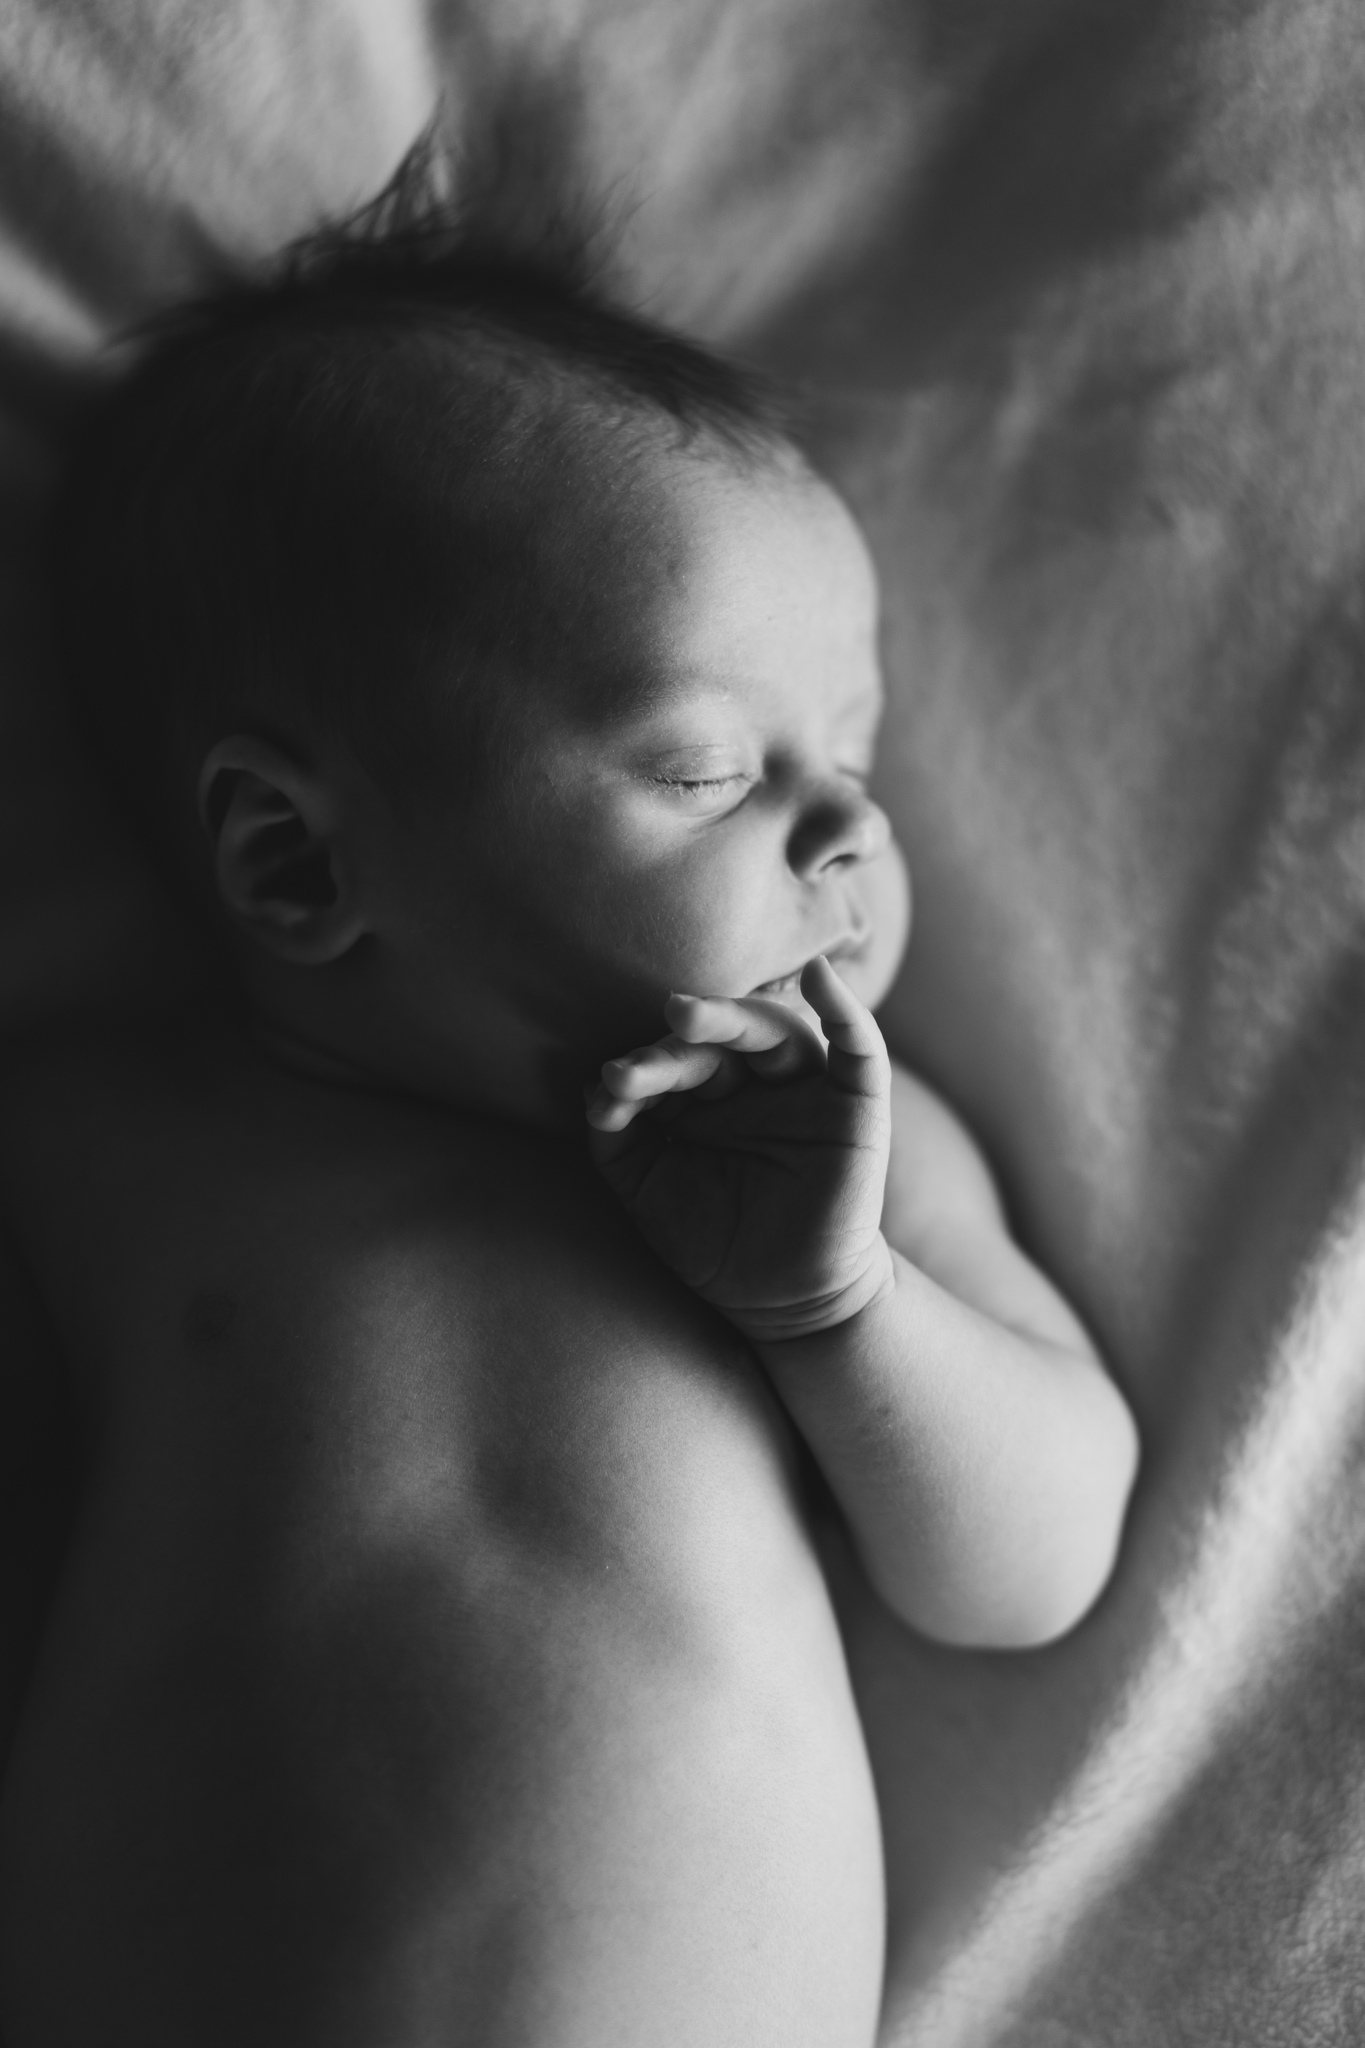 Home baby photos {Utah County infant photographer}